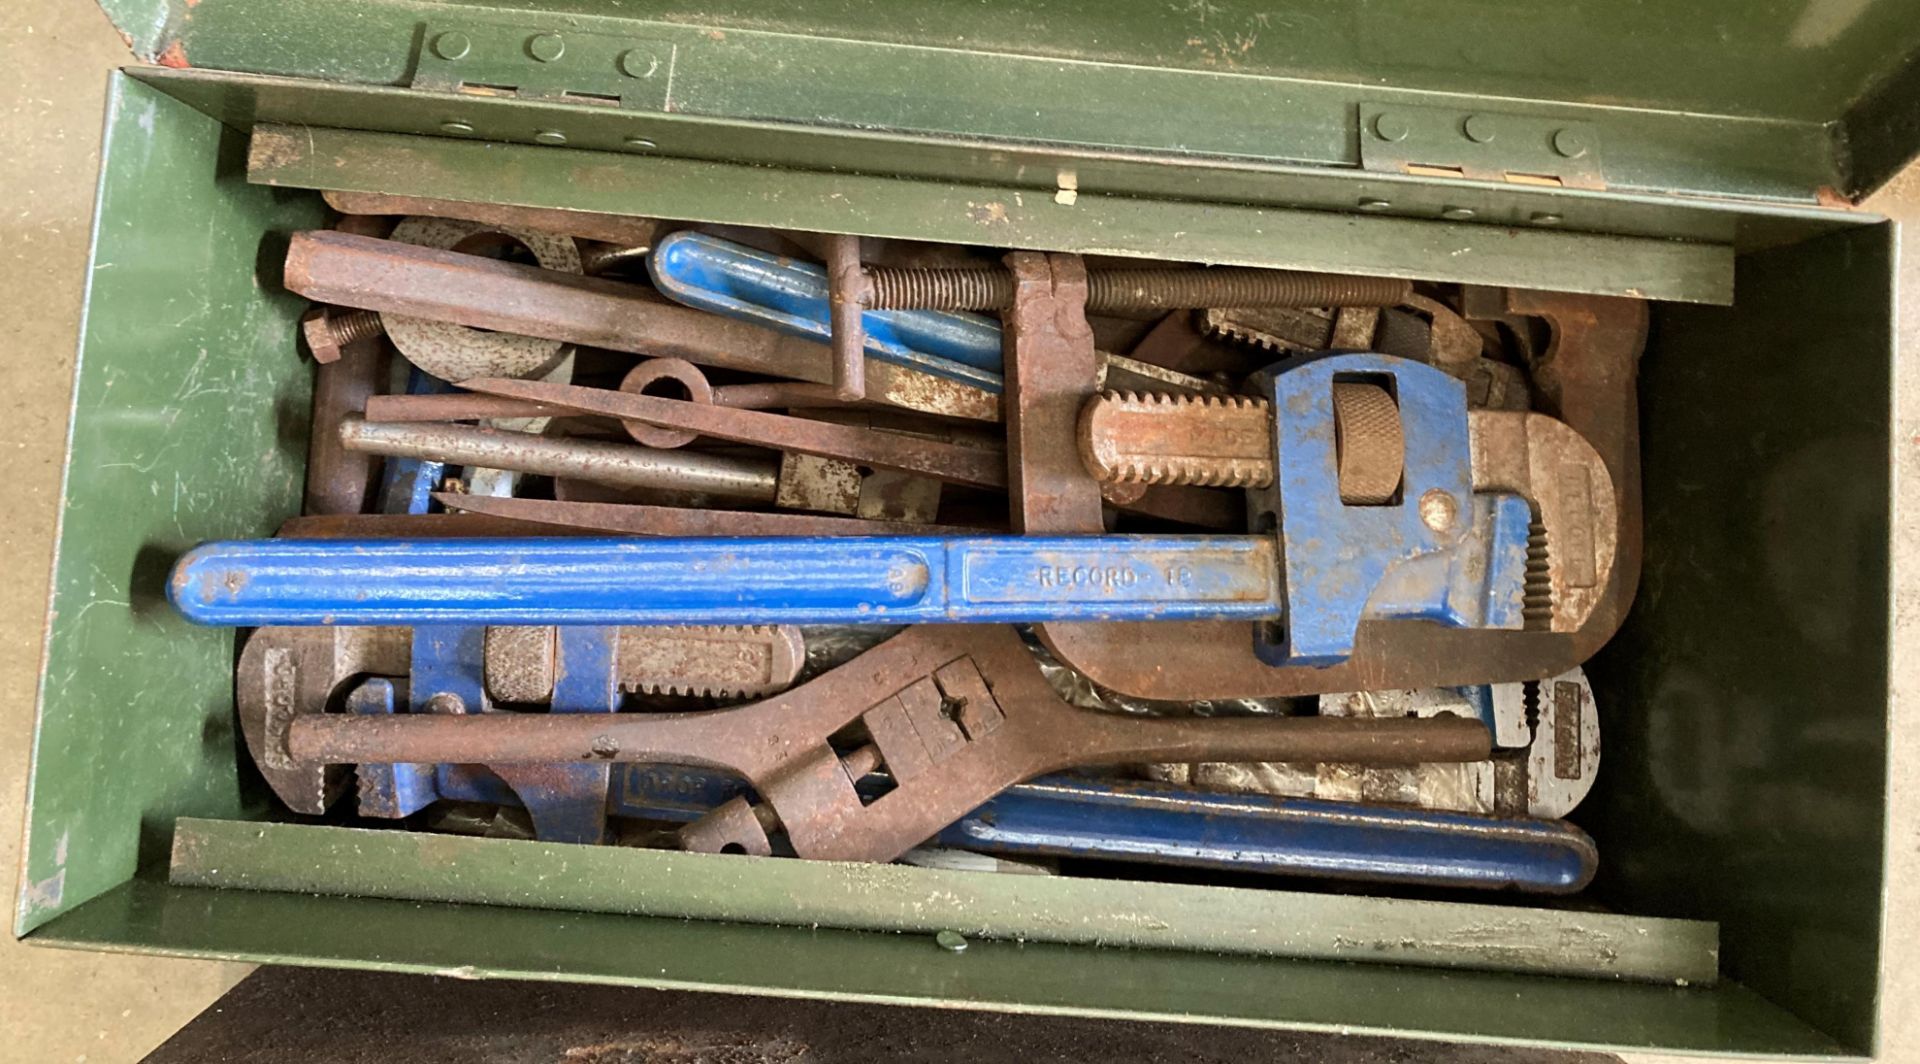 Three vintage green metal tool boxes, - Image 4 of 6